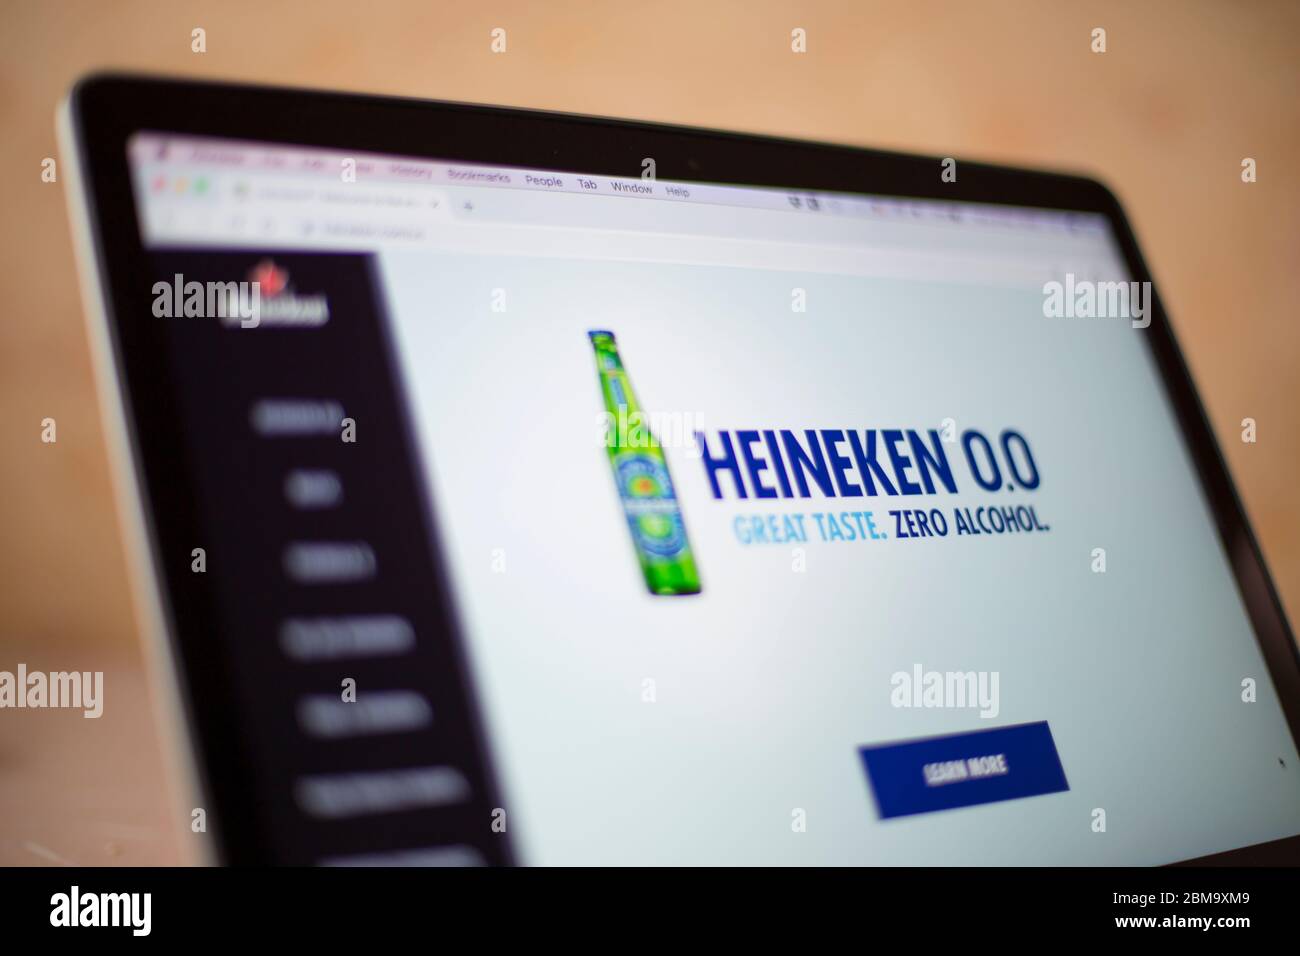 Heineken web site on computer screen. Heineken is Dutch brewing company founded in 1864. Stock Photo